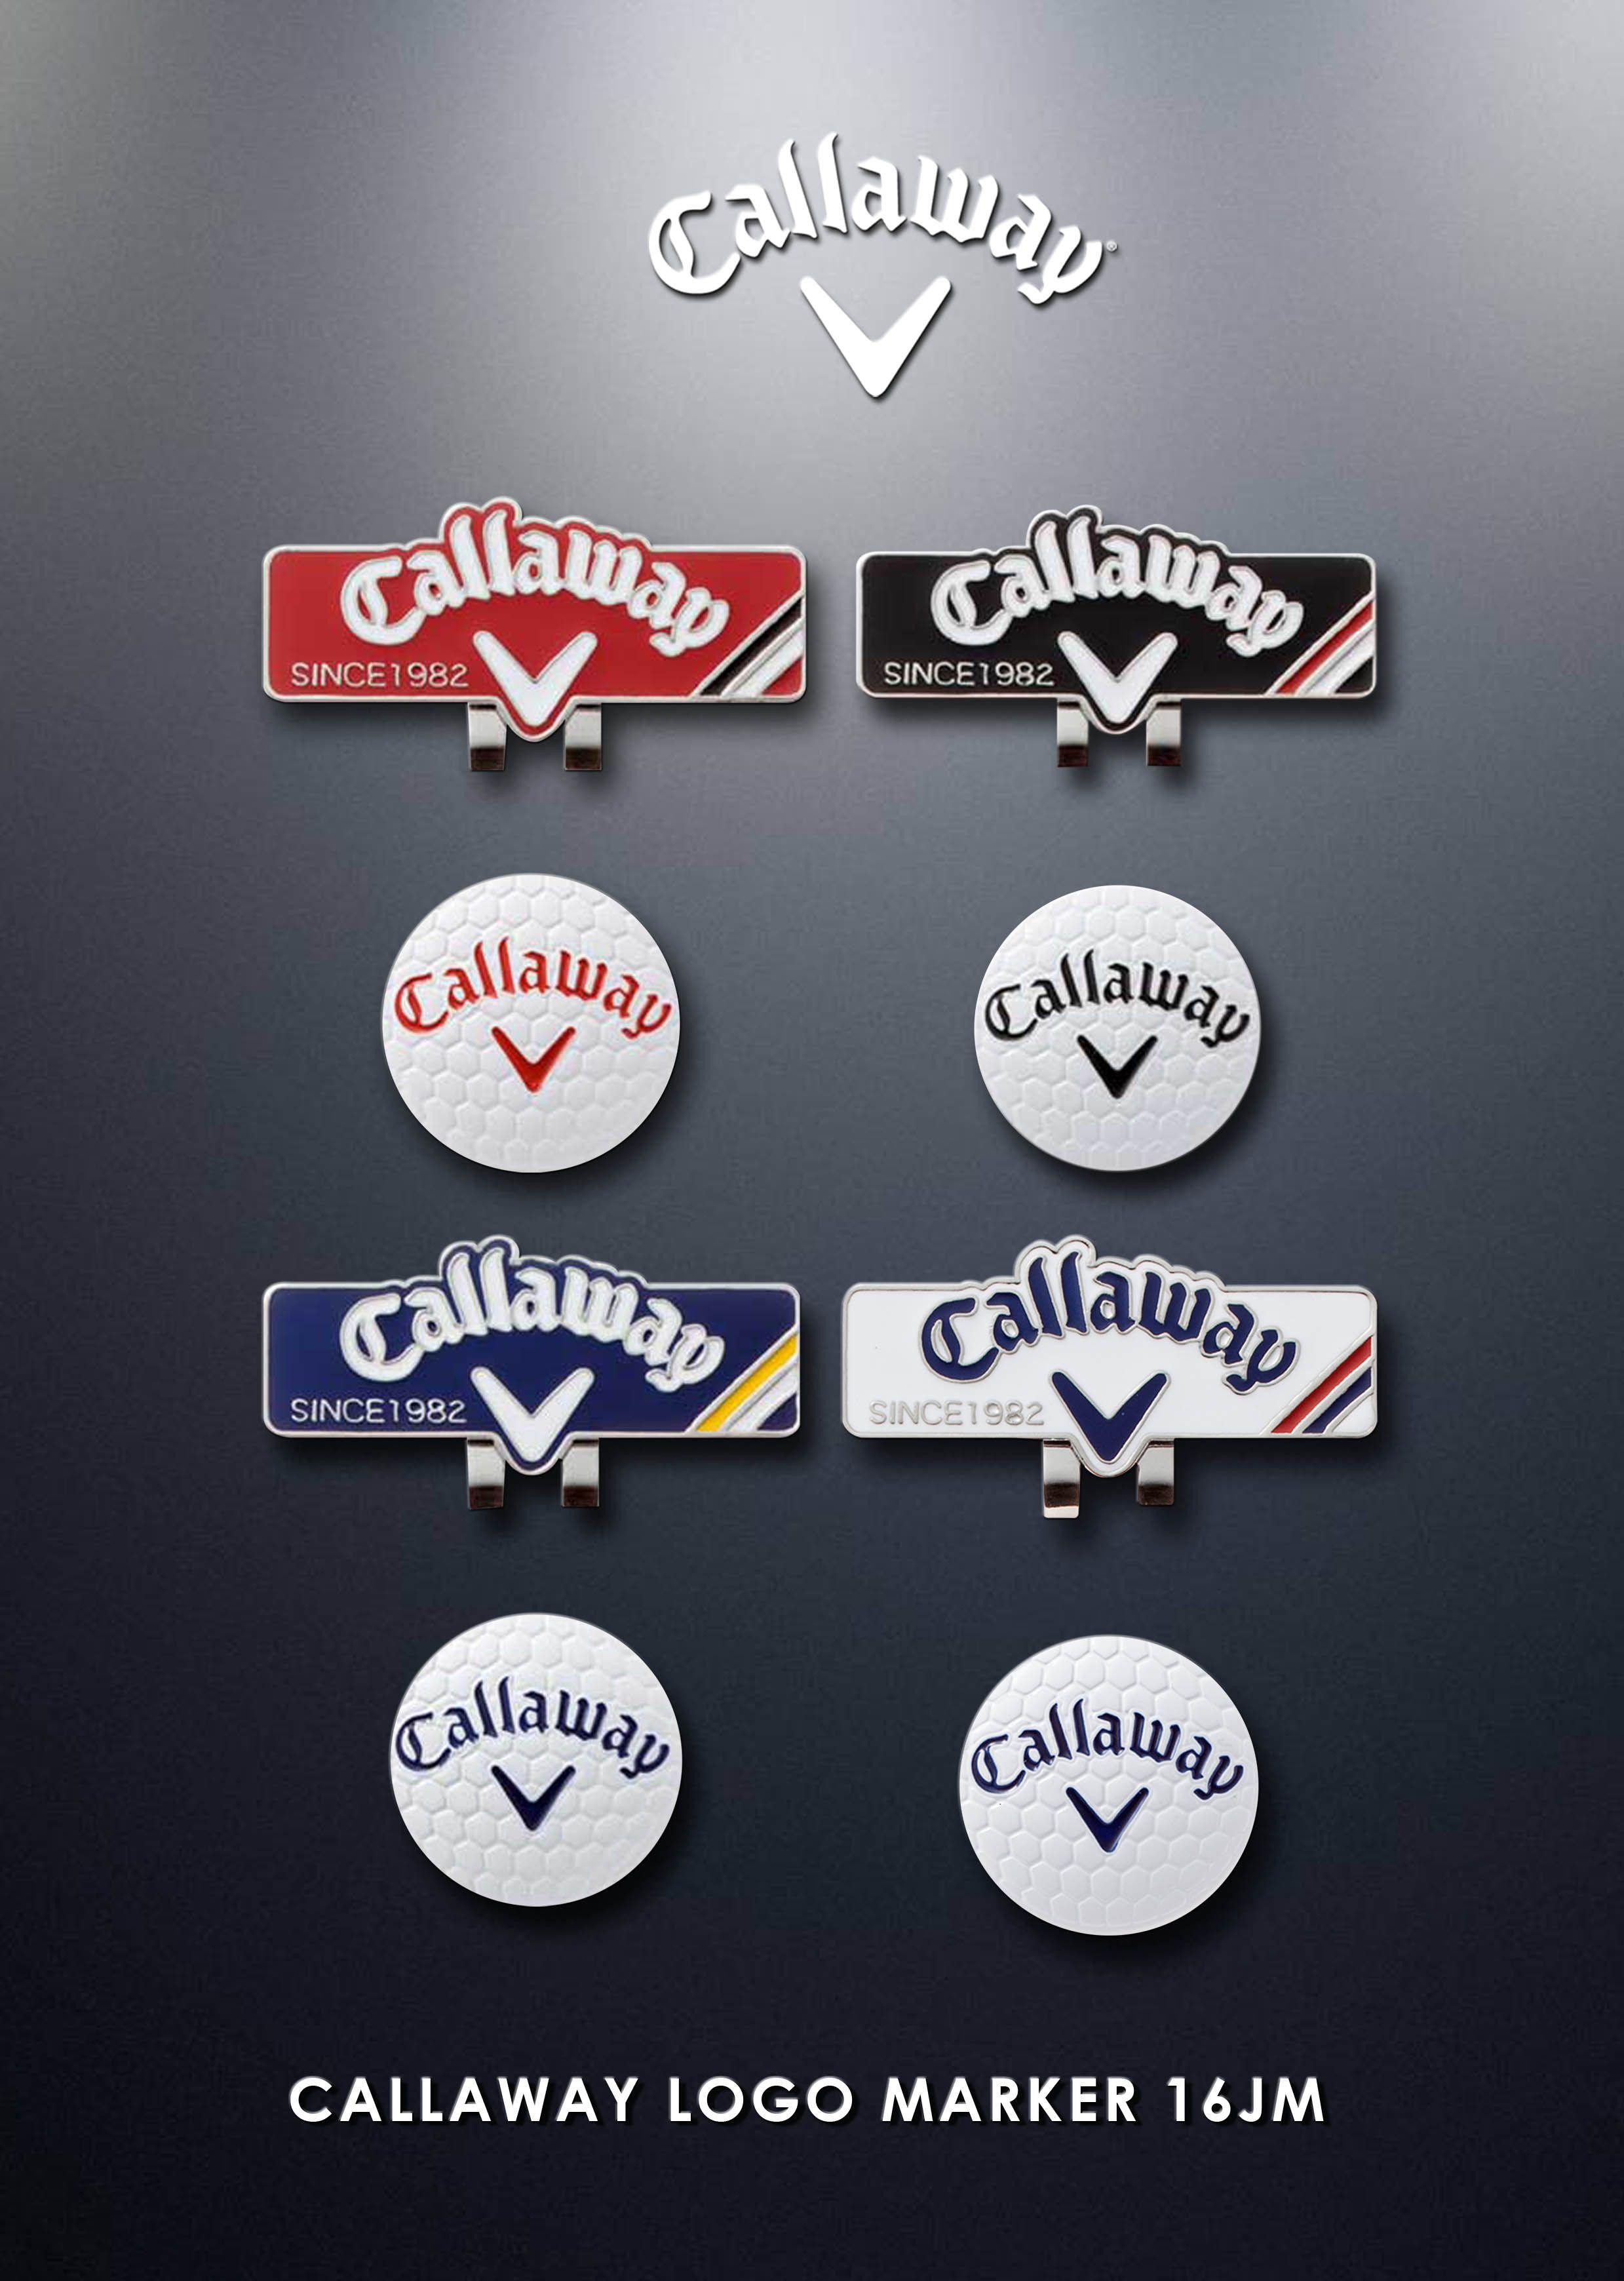 Callaway Logo - CALLAWAY LOGO MARKER 16JM | Distributor of Golf Equipments ...